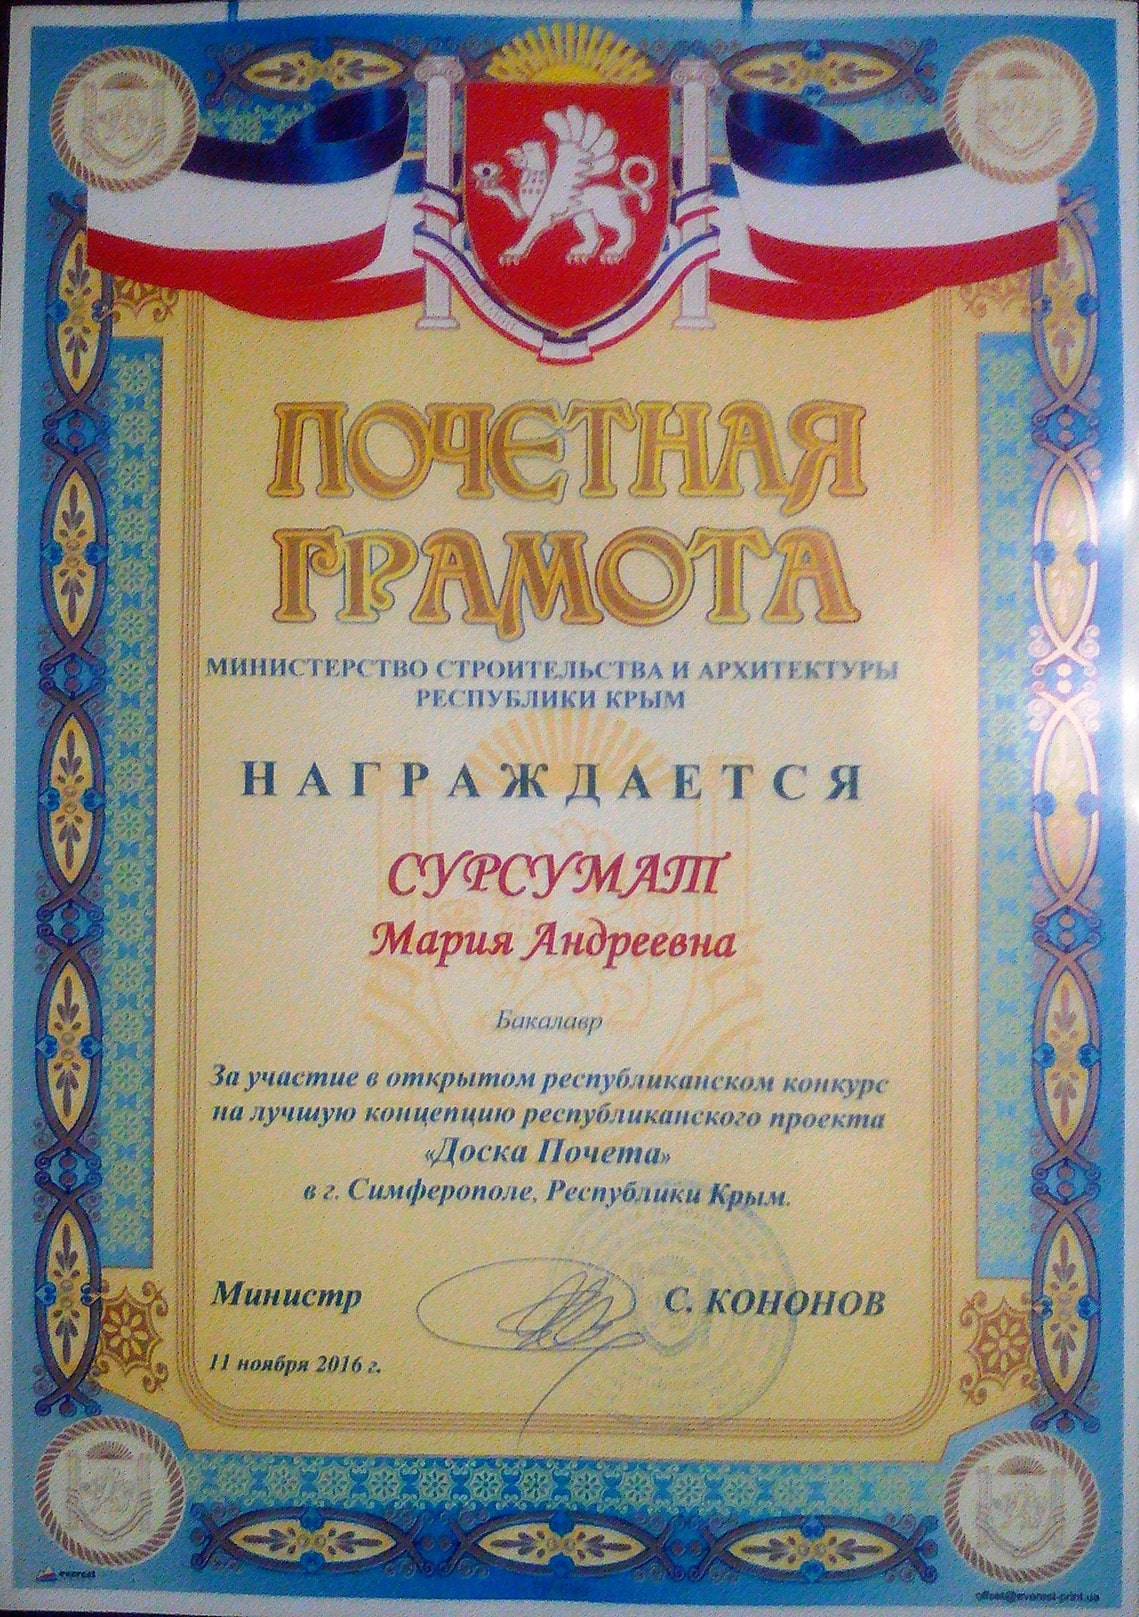 Сертификат инженерно-проектного бюро BuroProjects